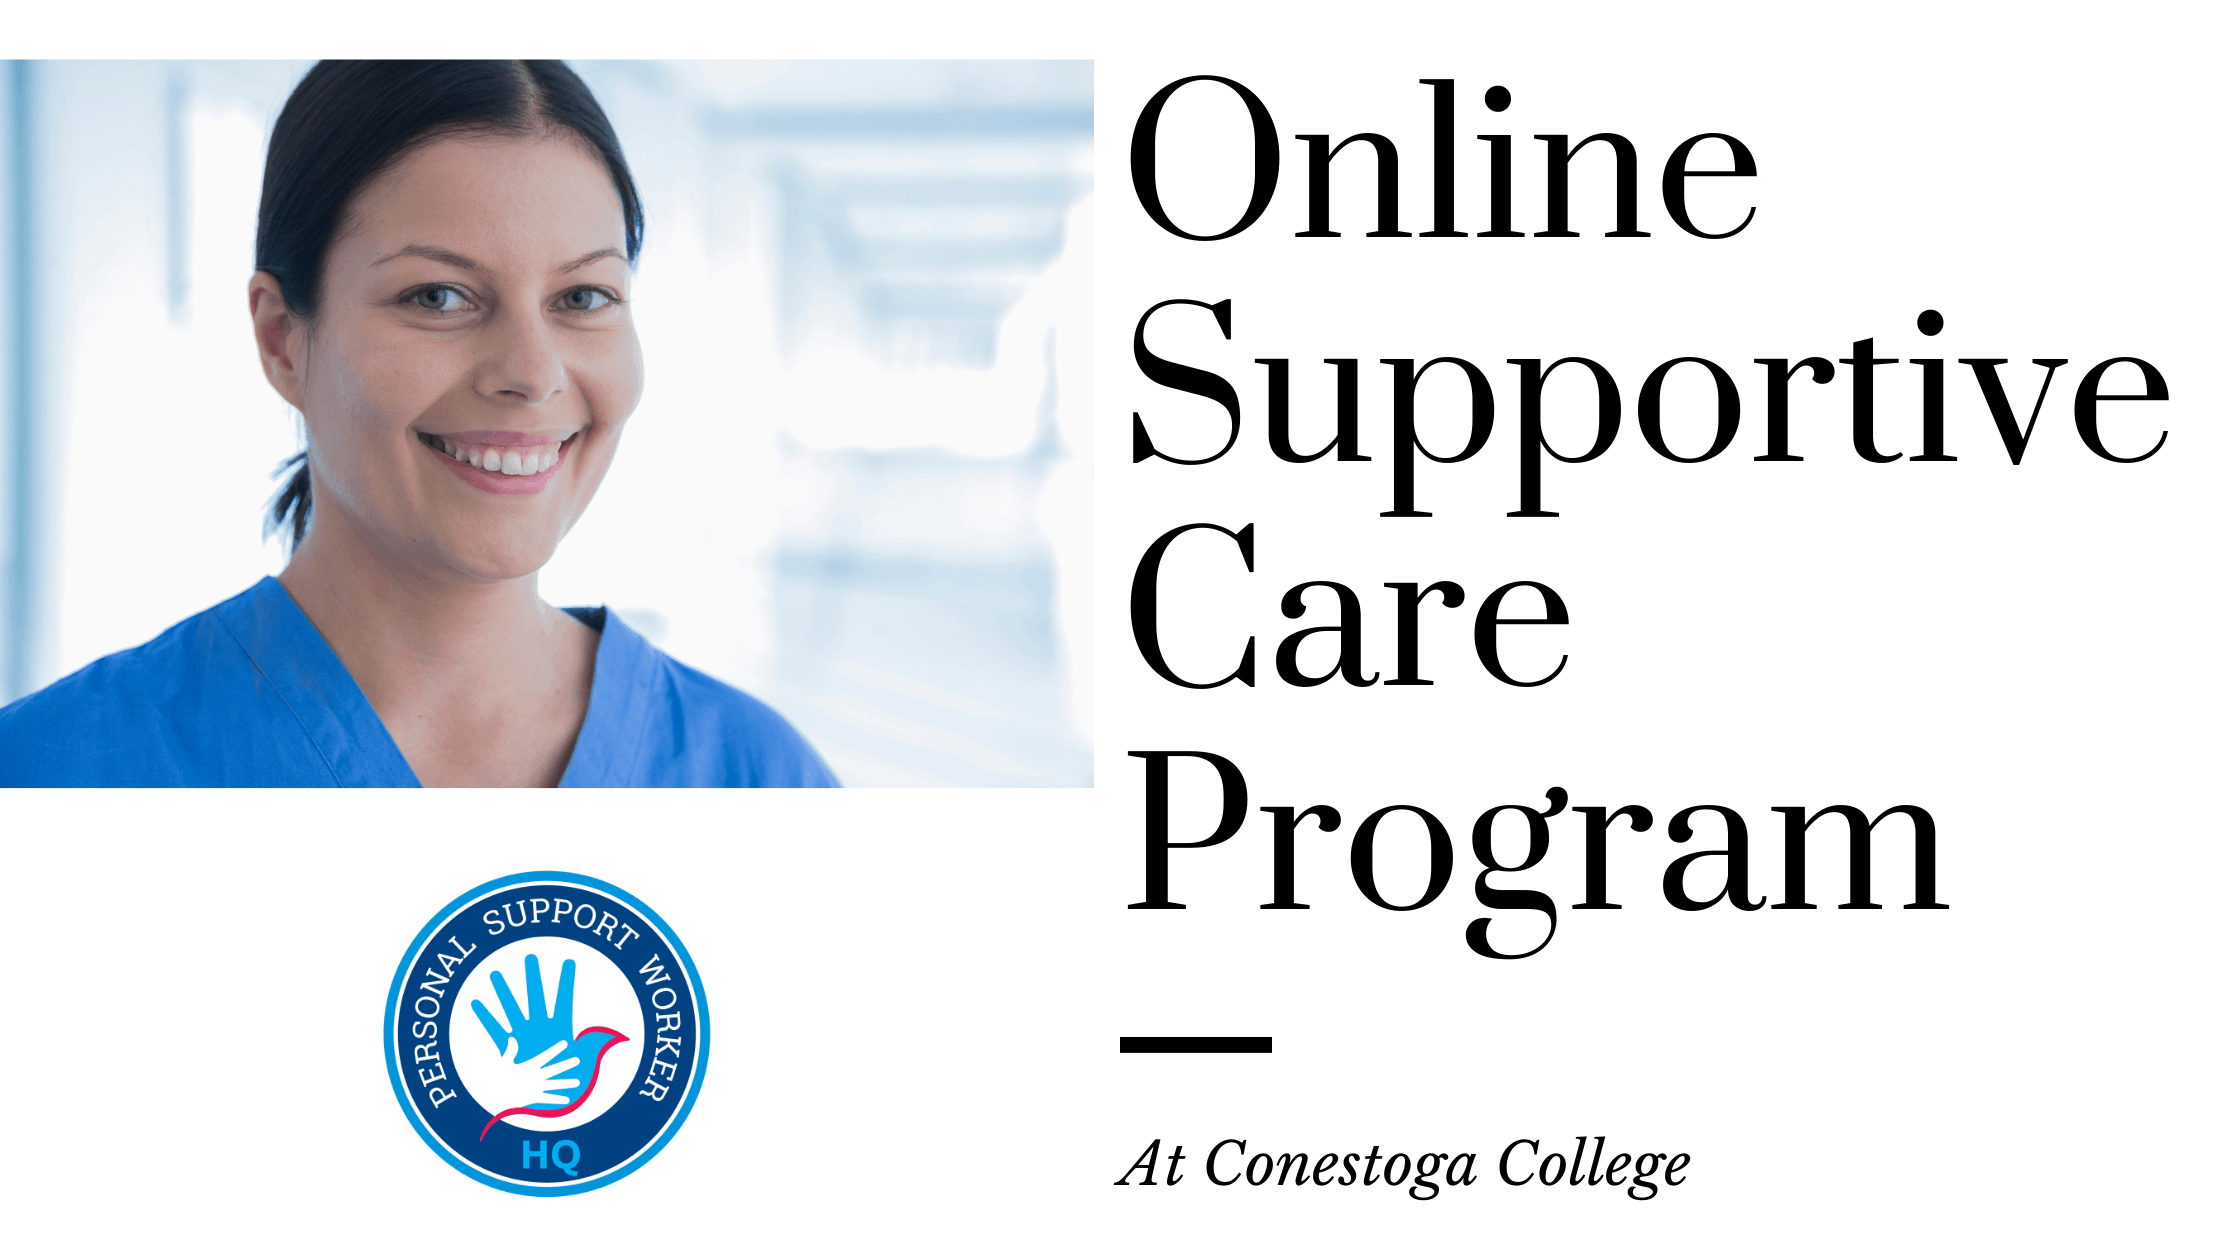 Free Online Supportive Care Program at Conestoga College